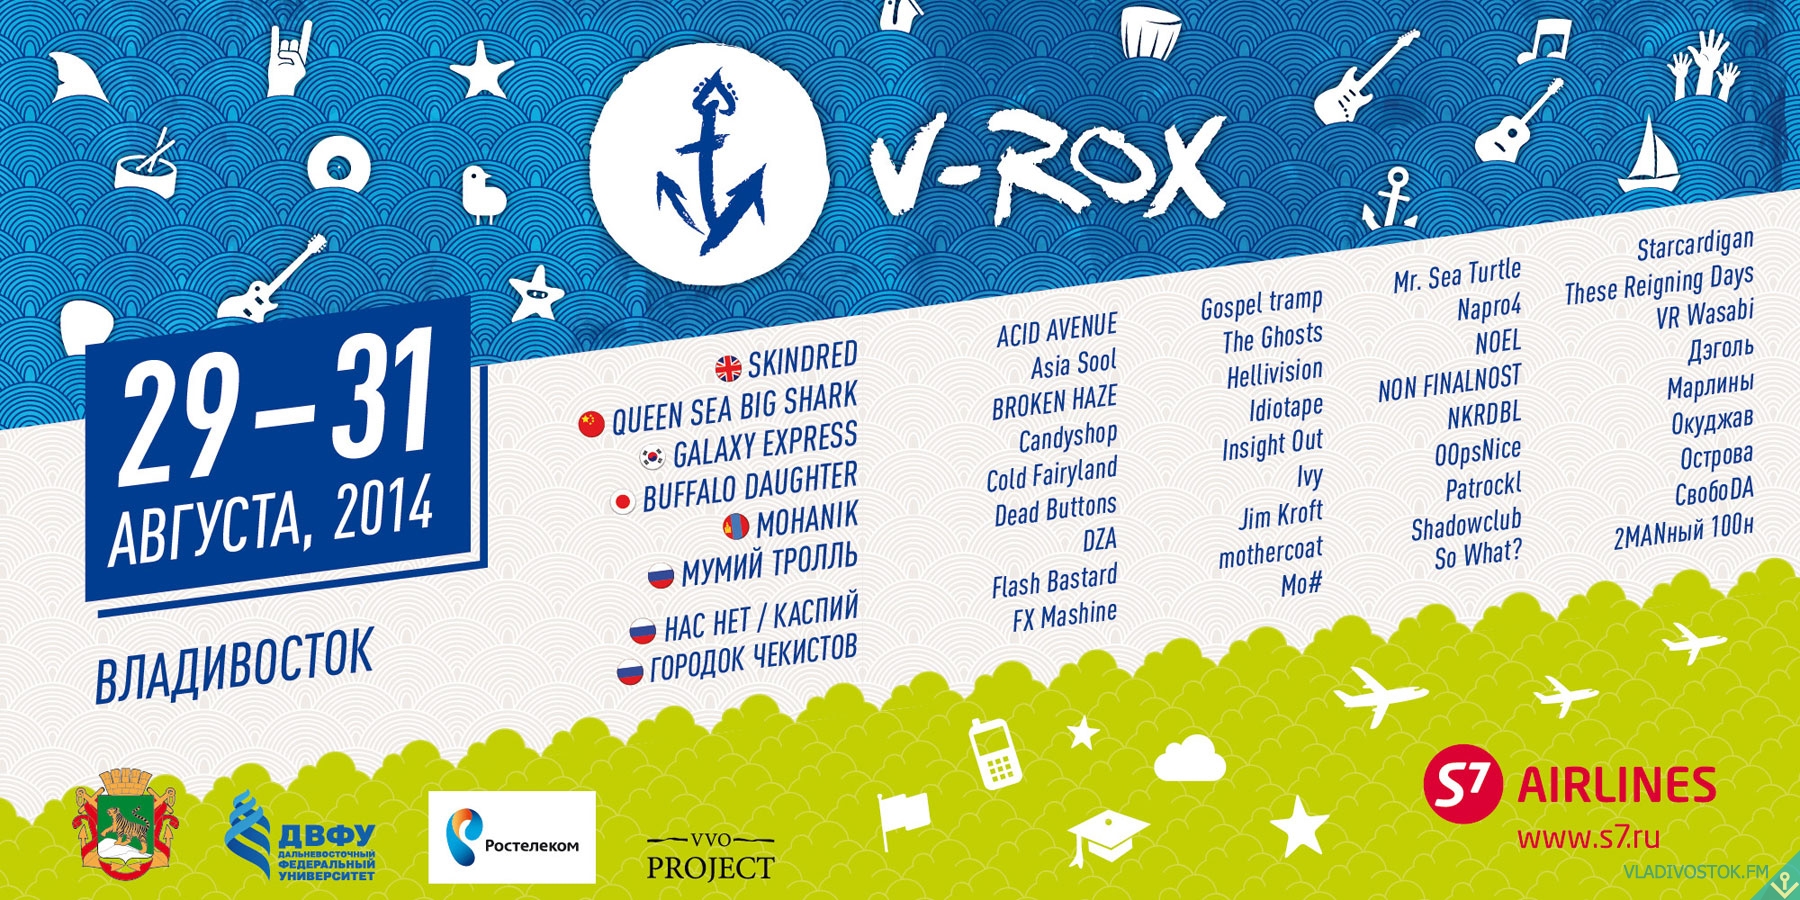 Рок-фестиваль V-ROX 2014